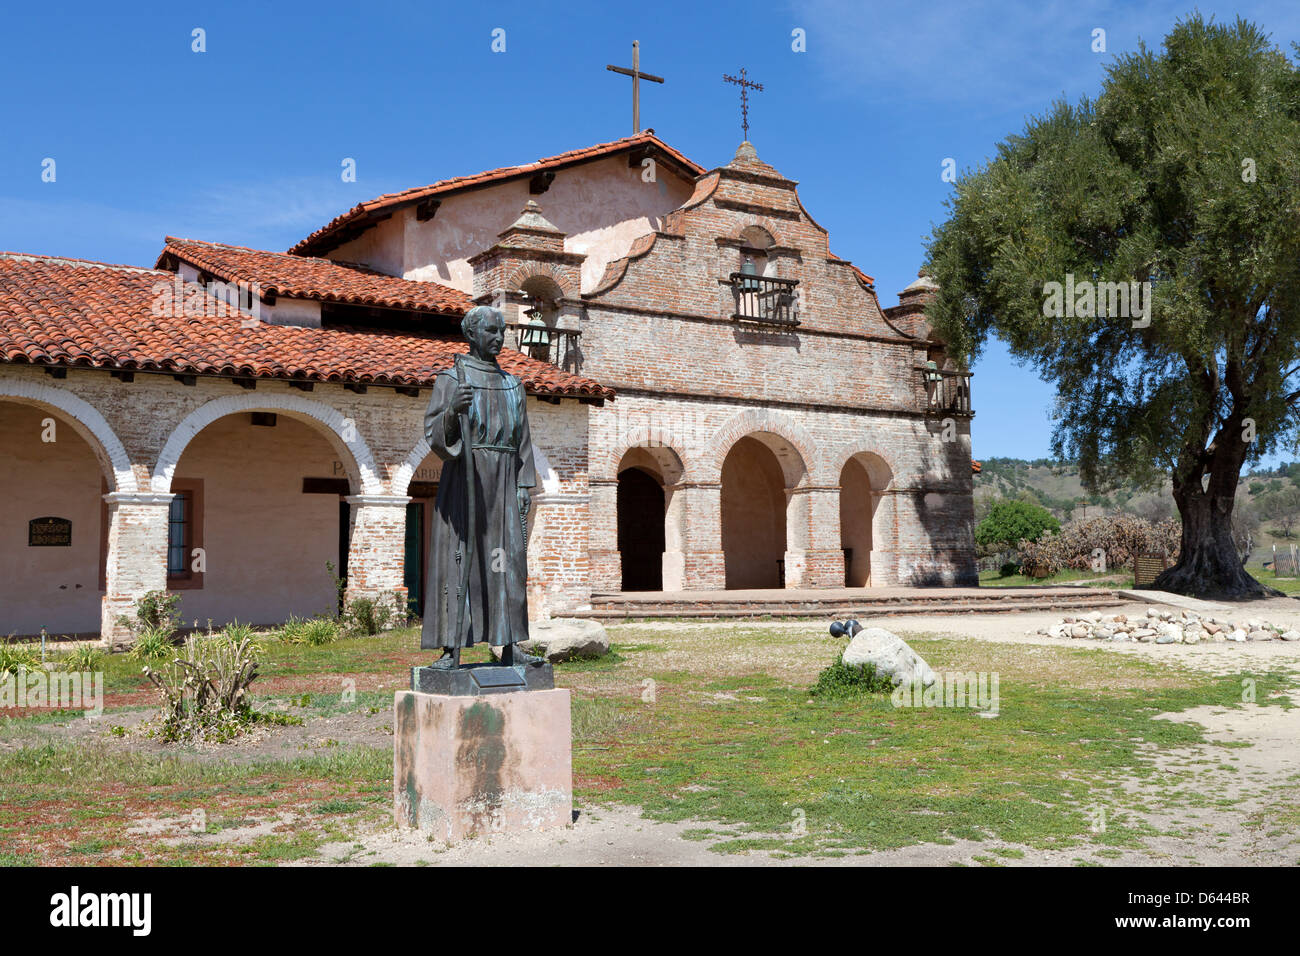 Statue of Father Junipero Serra stands at Mission San Antonio de Padua along the El Camino Real in California. Stock Photo